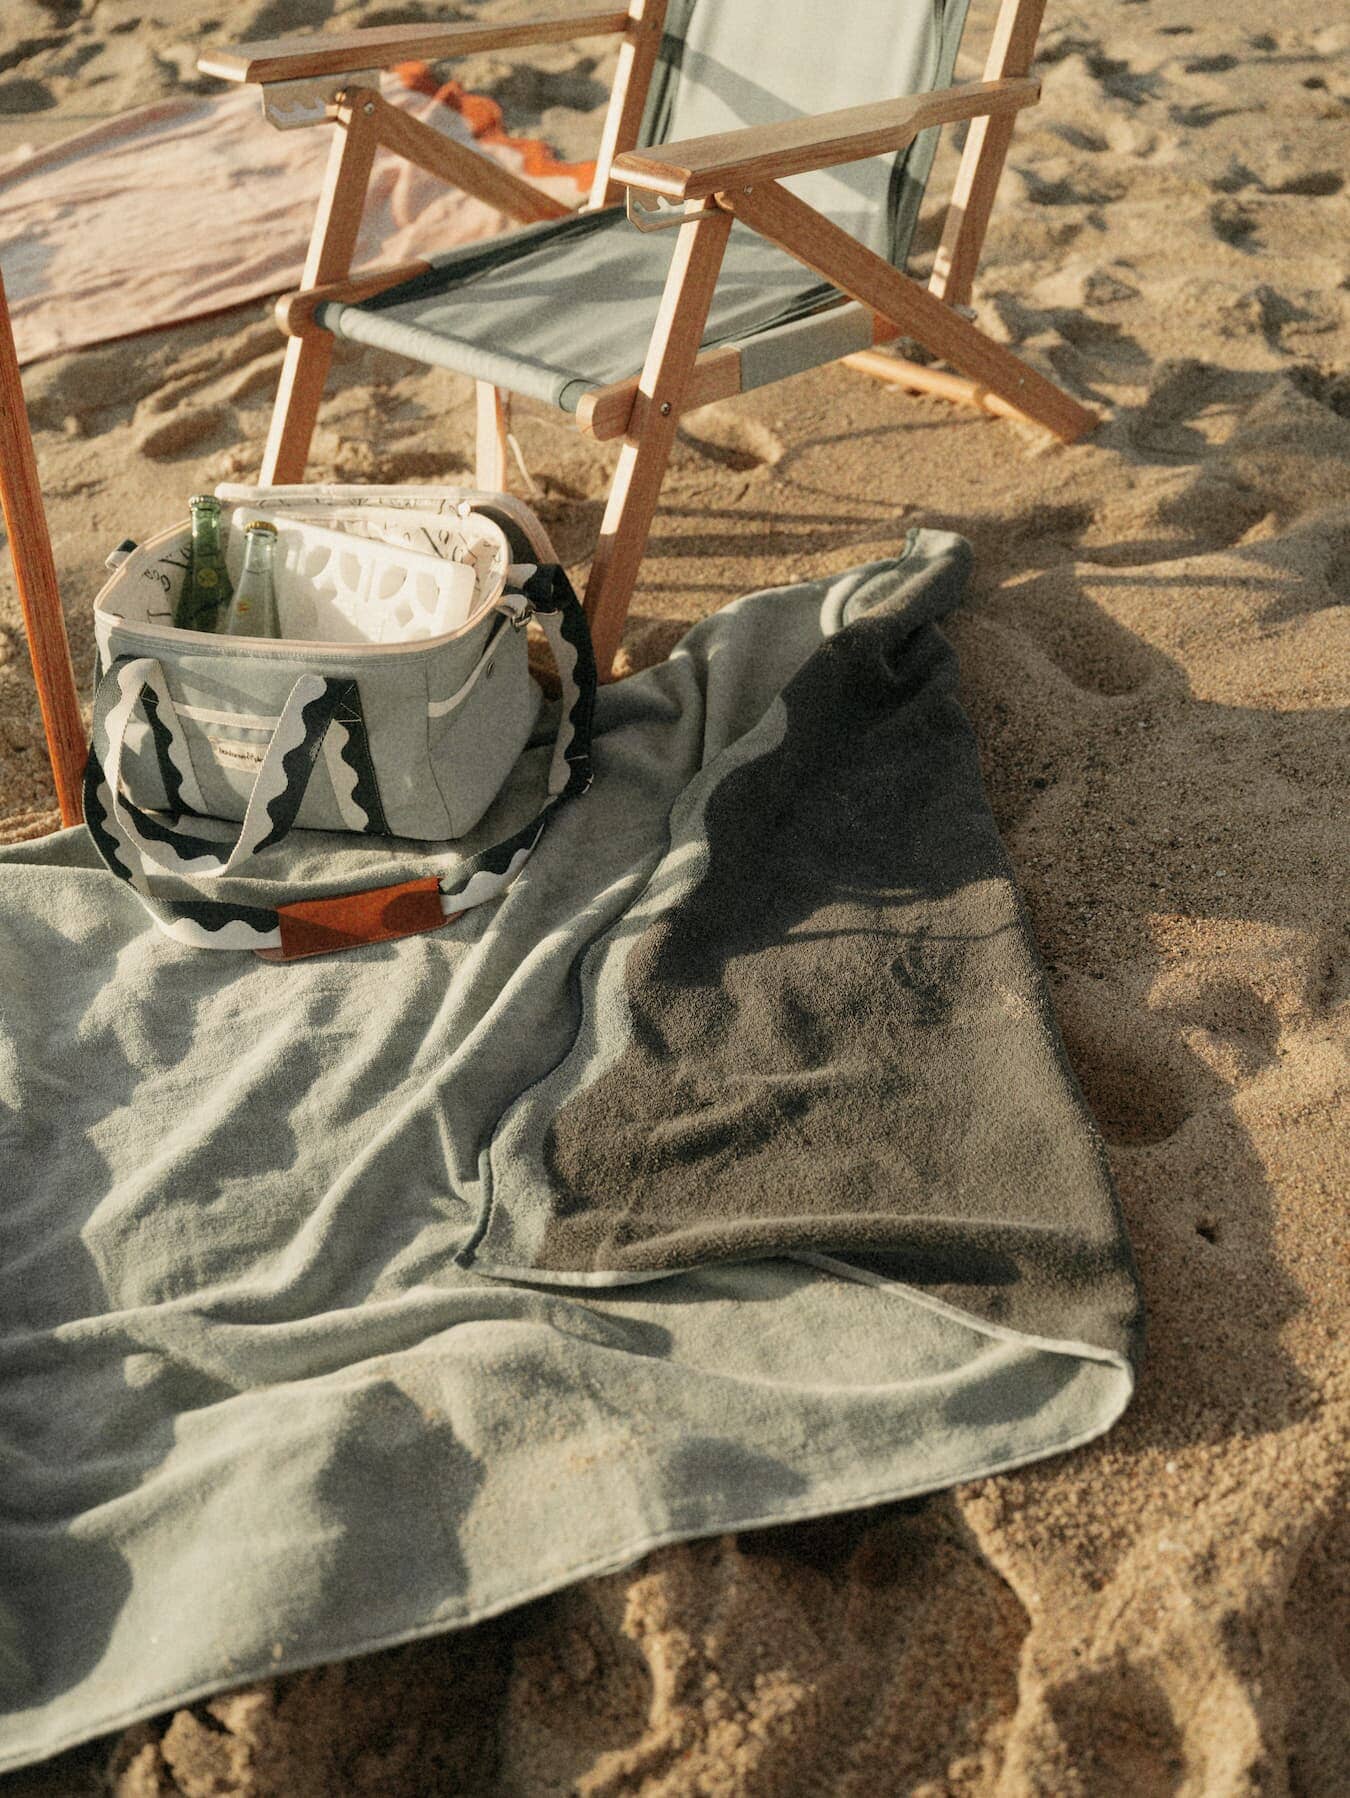 Beach set up with Riviera green umbrella, chair, towel & cooler